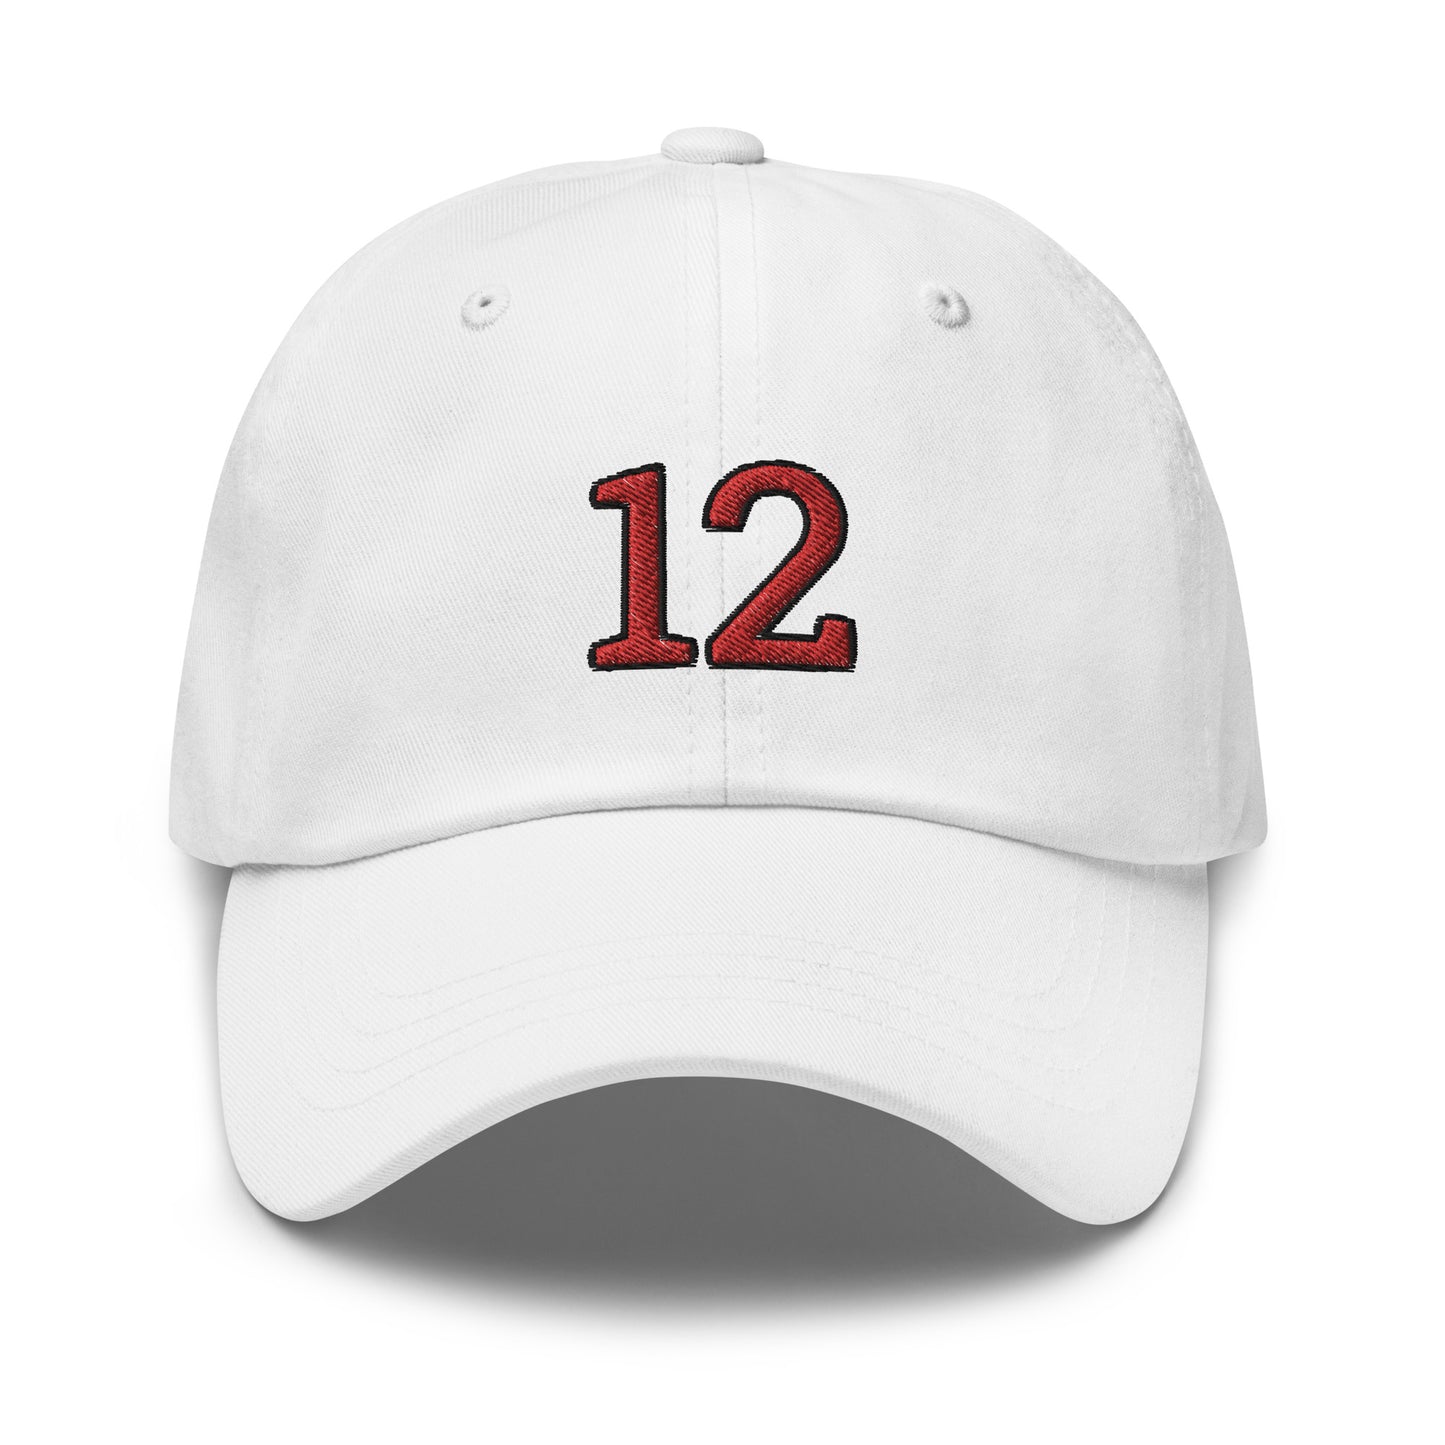 Tom Brady Hat / TB12 Hat / Tampa Bay Buccaneers / 12 Dad hat